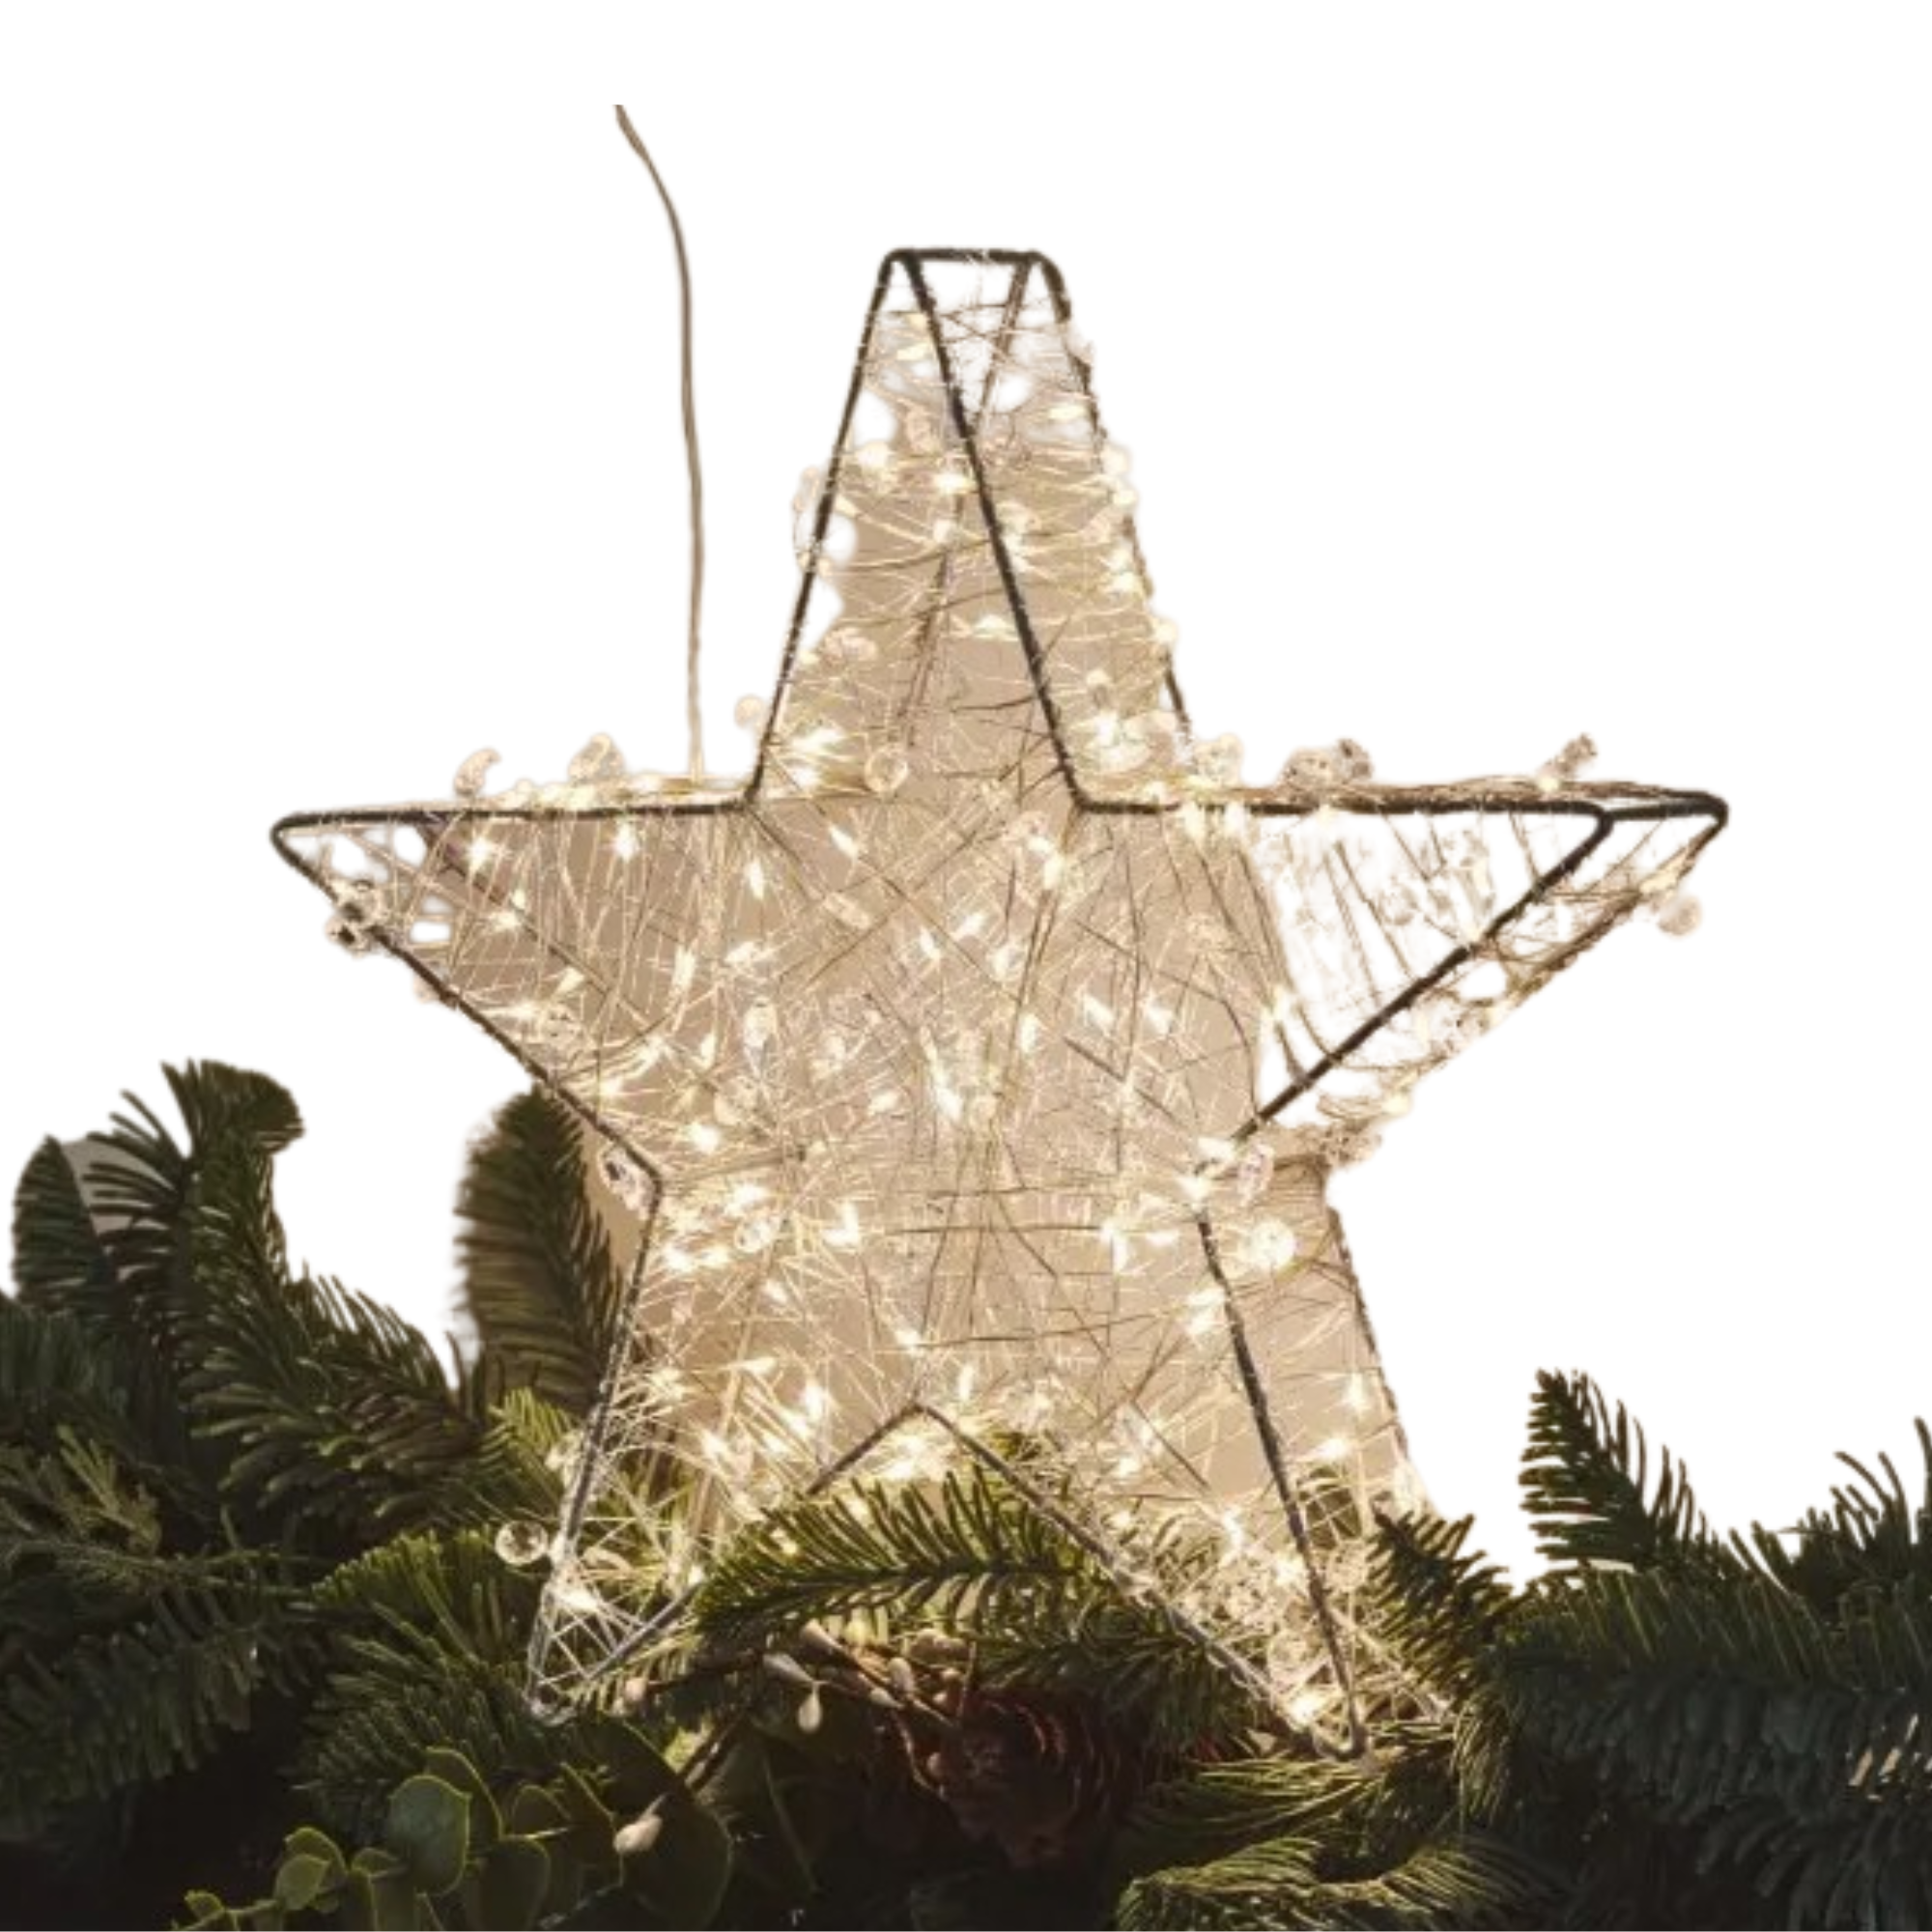 Lightstyle London Silver Galaxy Star Mains Powered 30cm LED Hanging Light (UK Plug)